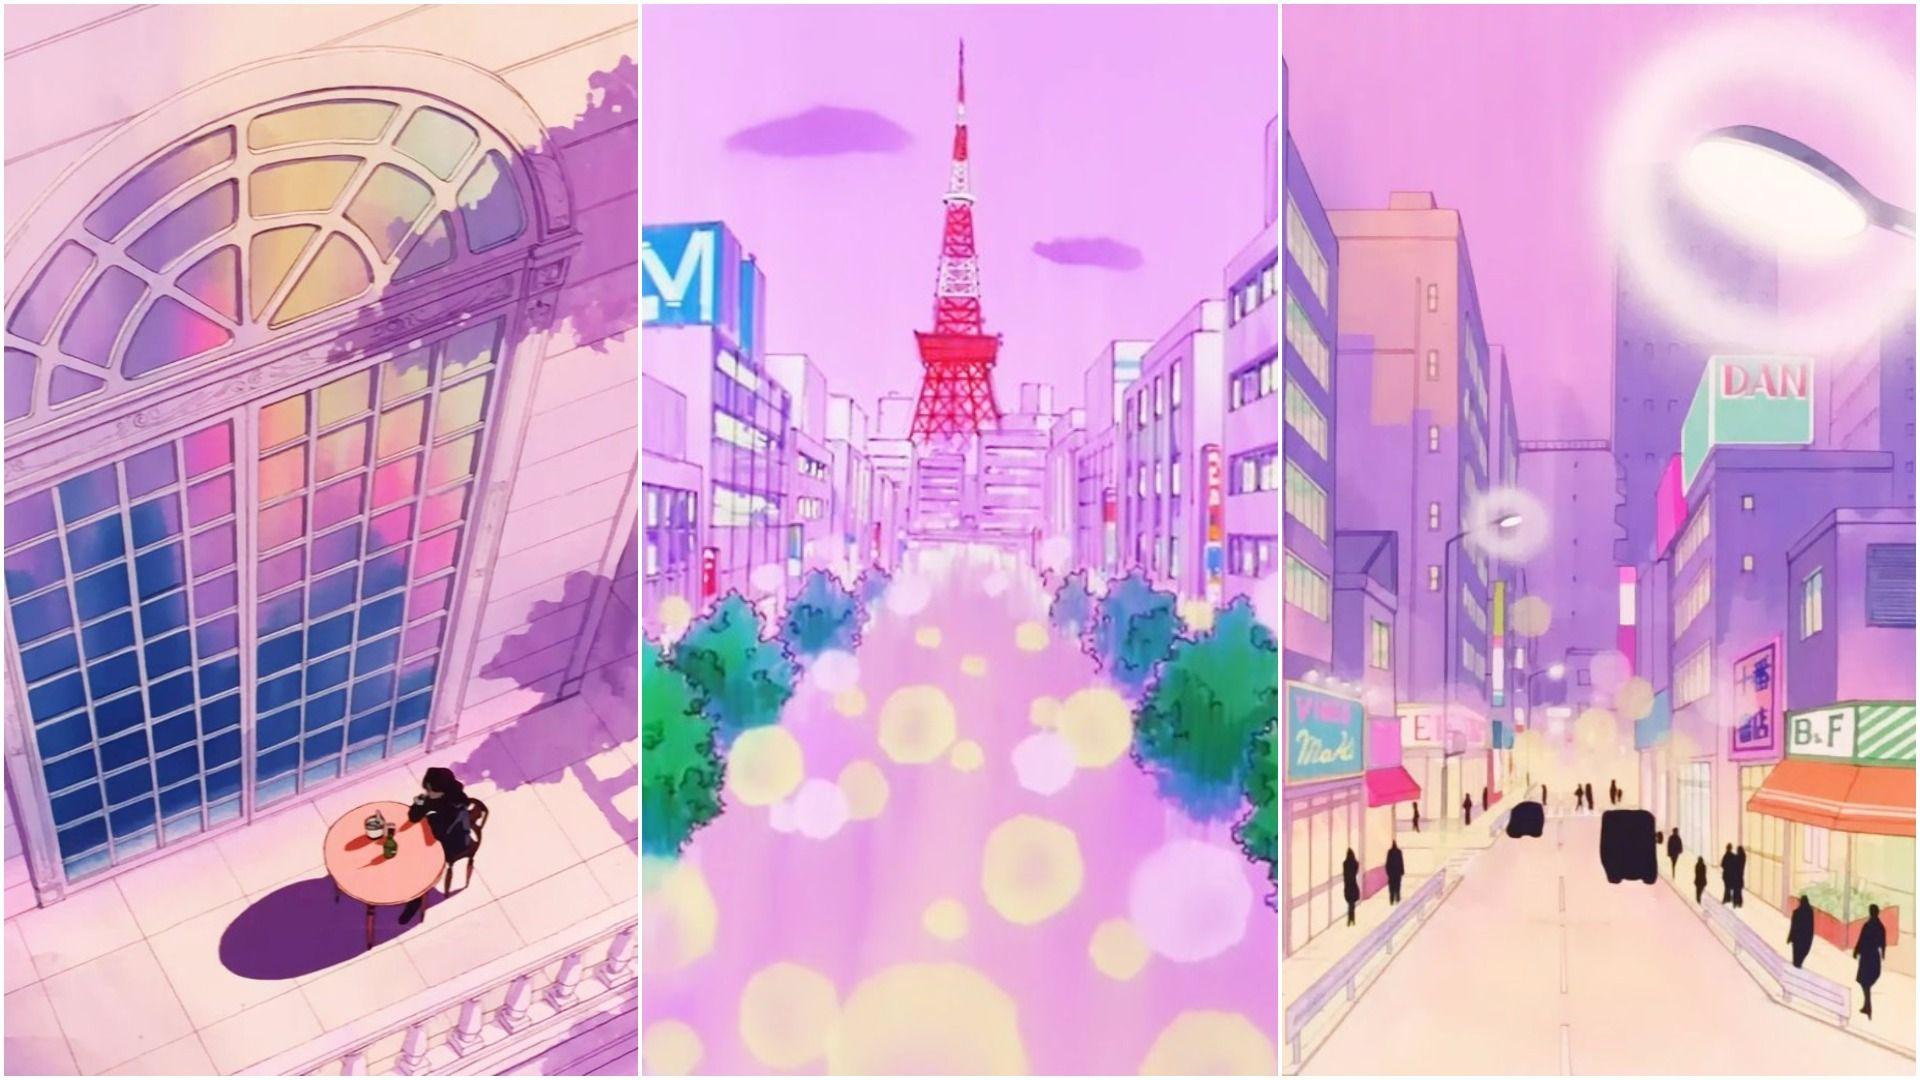 Let's Admire Sailor Moon Anime Scenery. Sailor moon